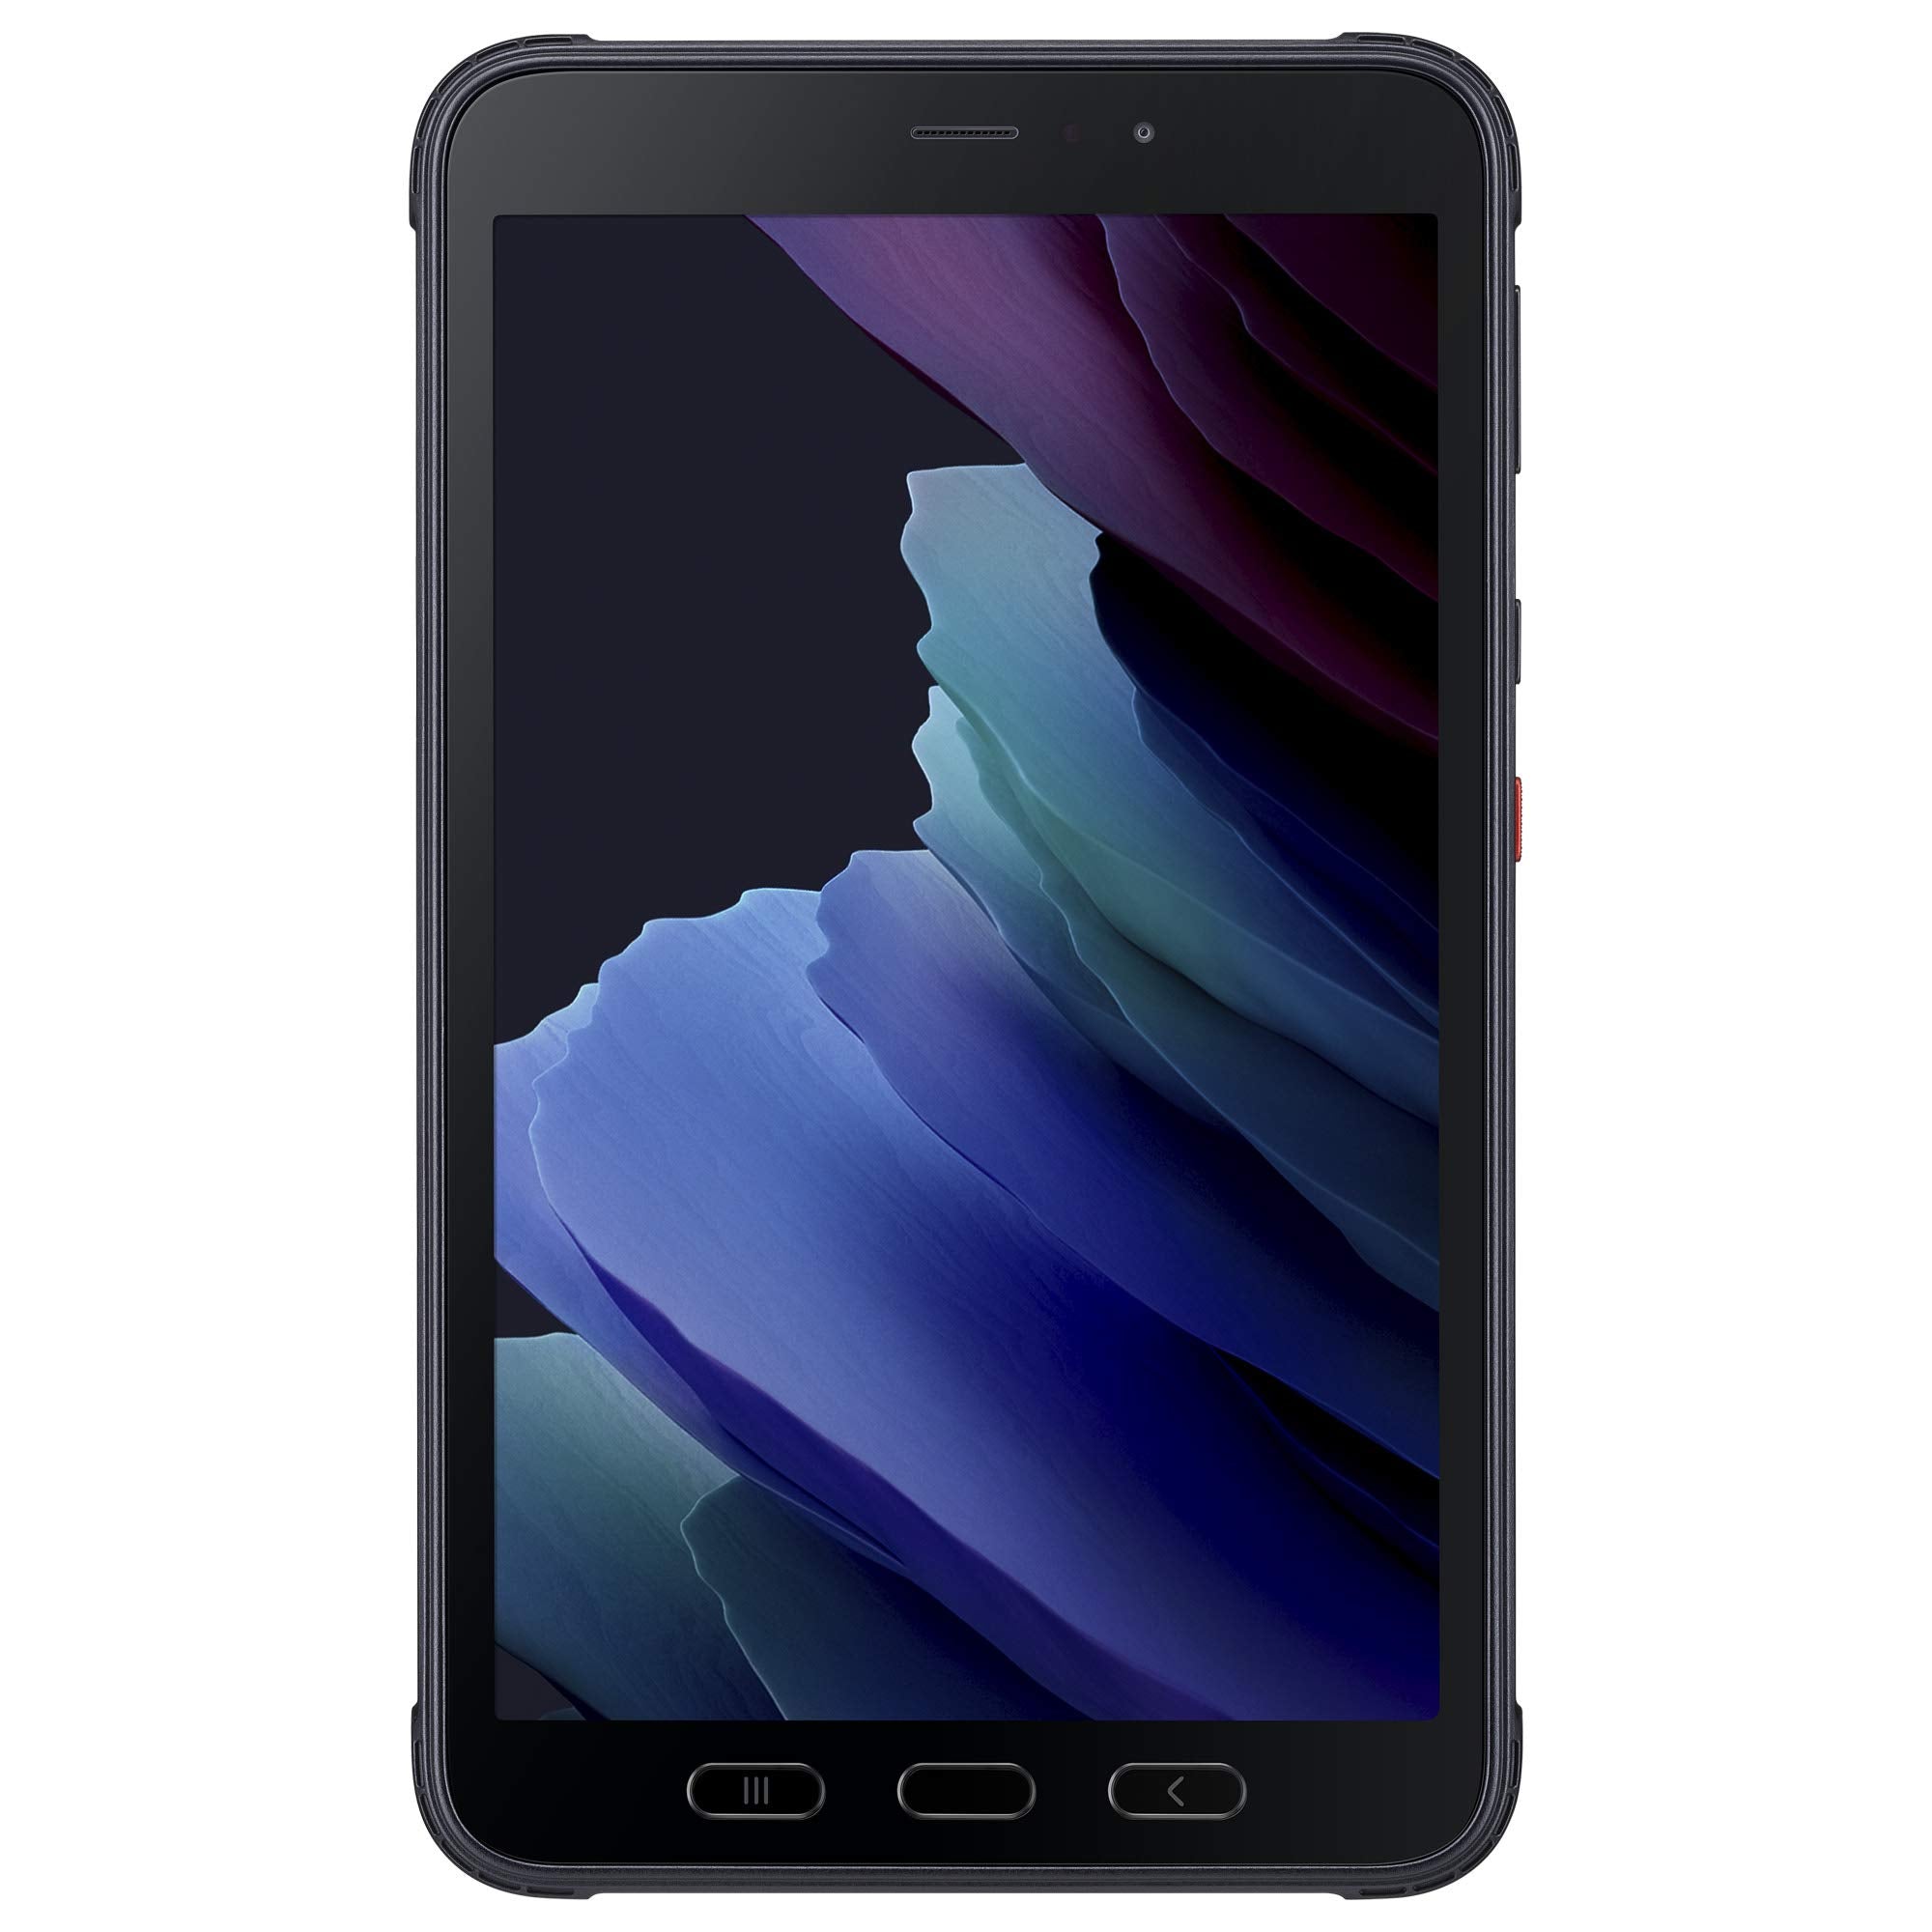 Samsung Galaxy Tab Active 3 LTE - Black